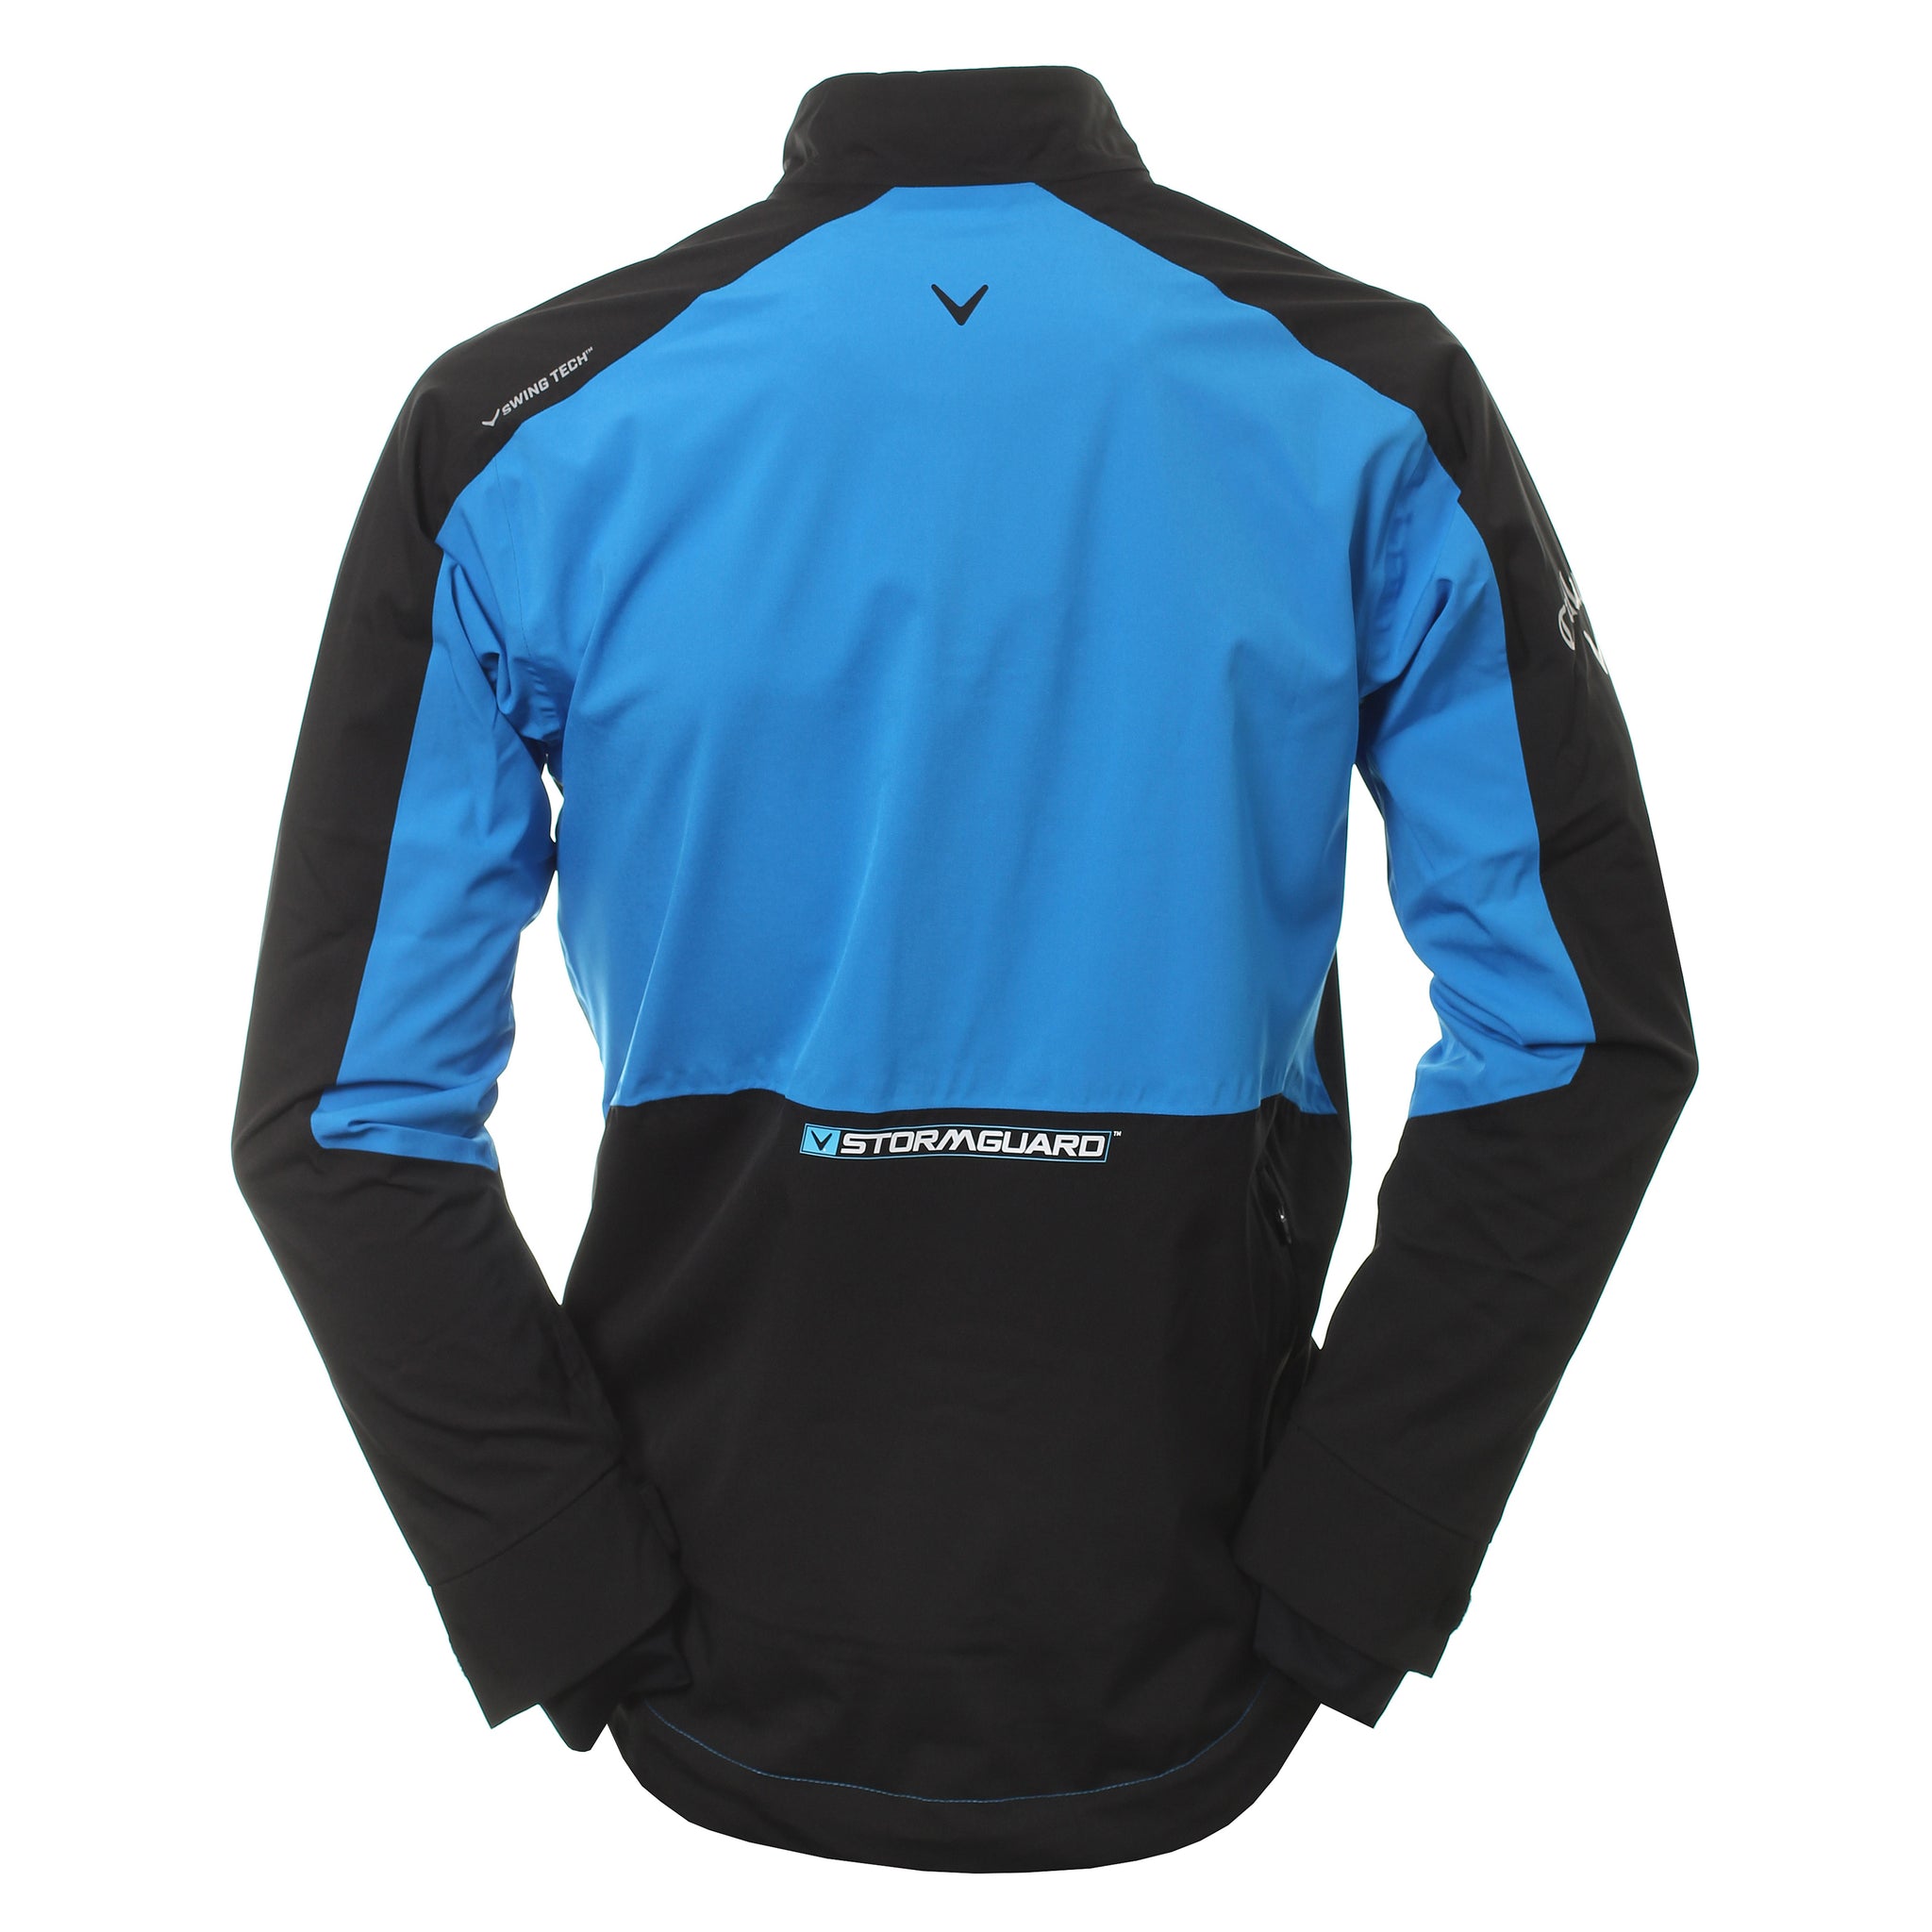 callaway-golf-stormguard-waterproof-jacketcgrfa0e2-lectric-blue-lemonade-453